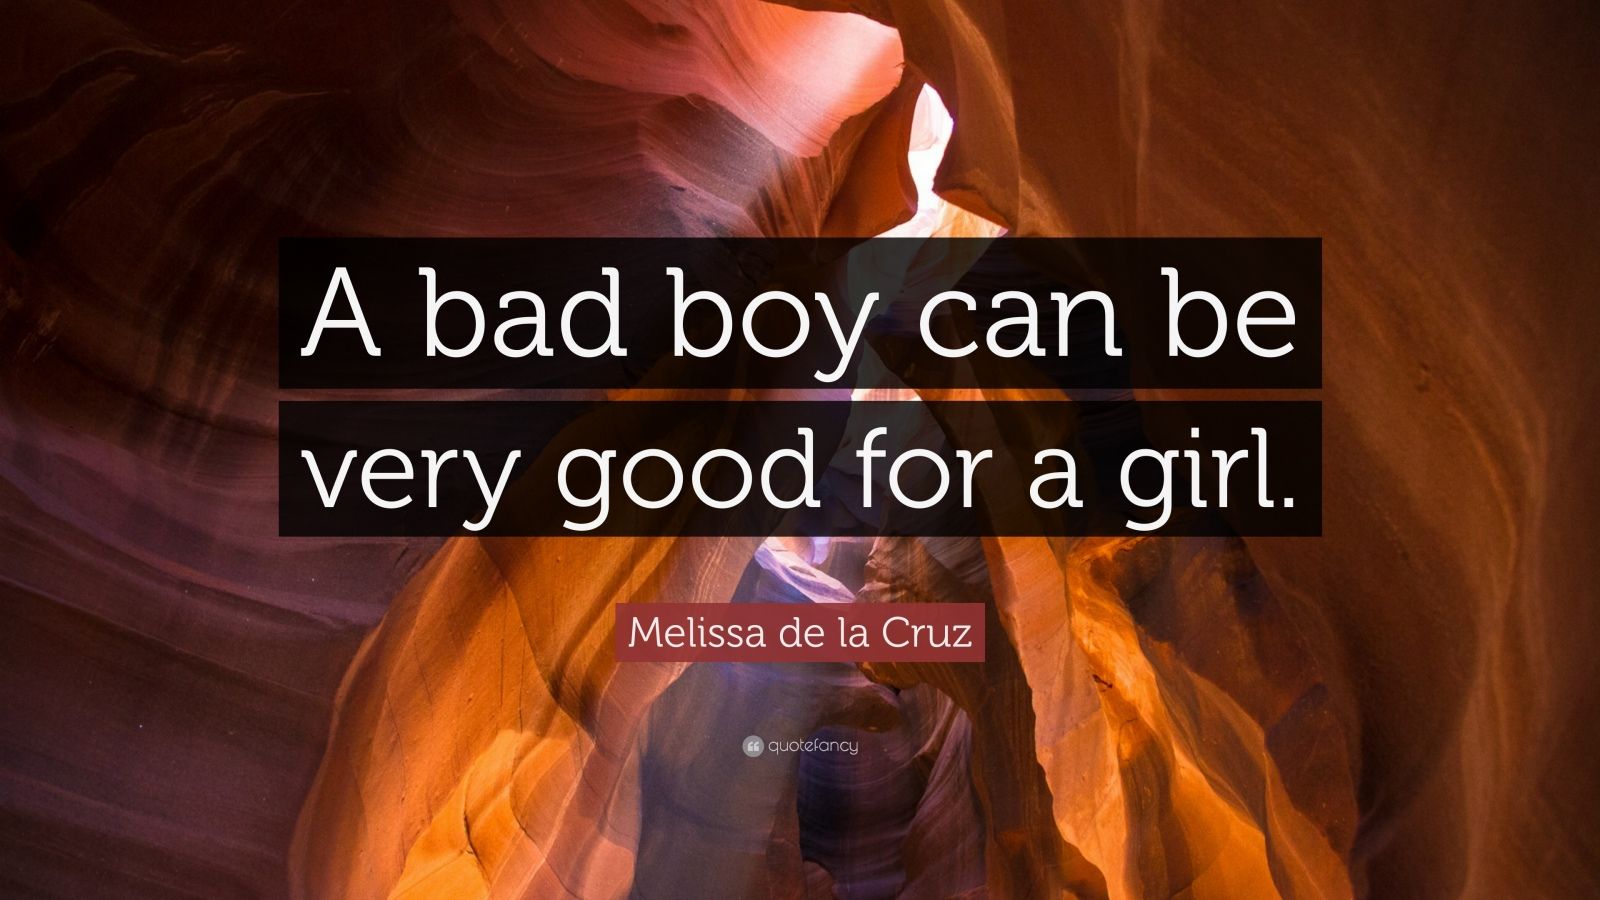 Melissa de la Cruz Quote: “A bad boy can be very good for a girl.”